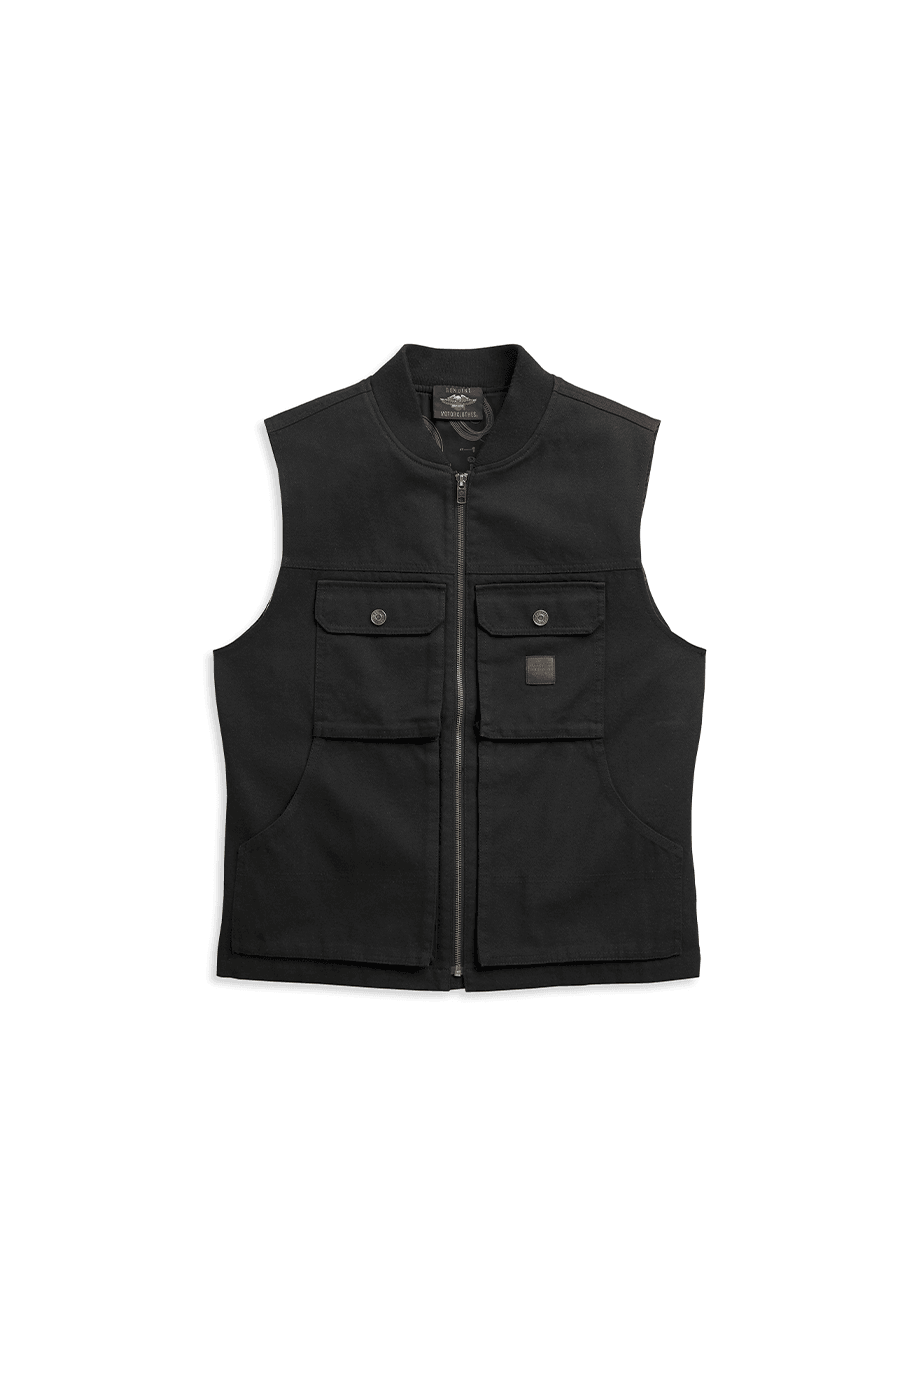 Harley-Davidson® Men's Waxed Cotton Vest